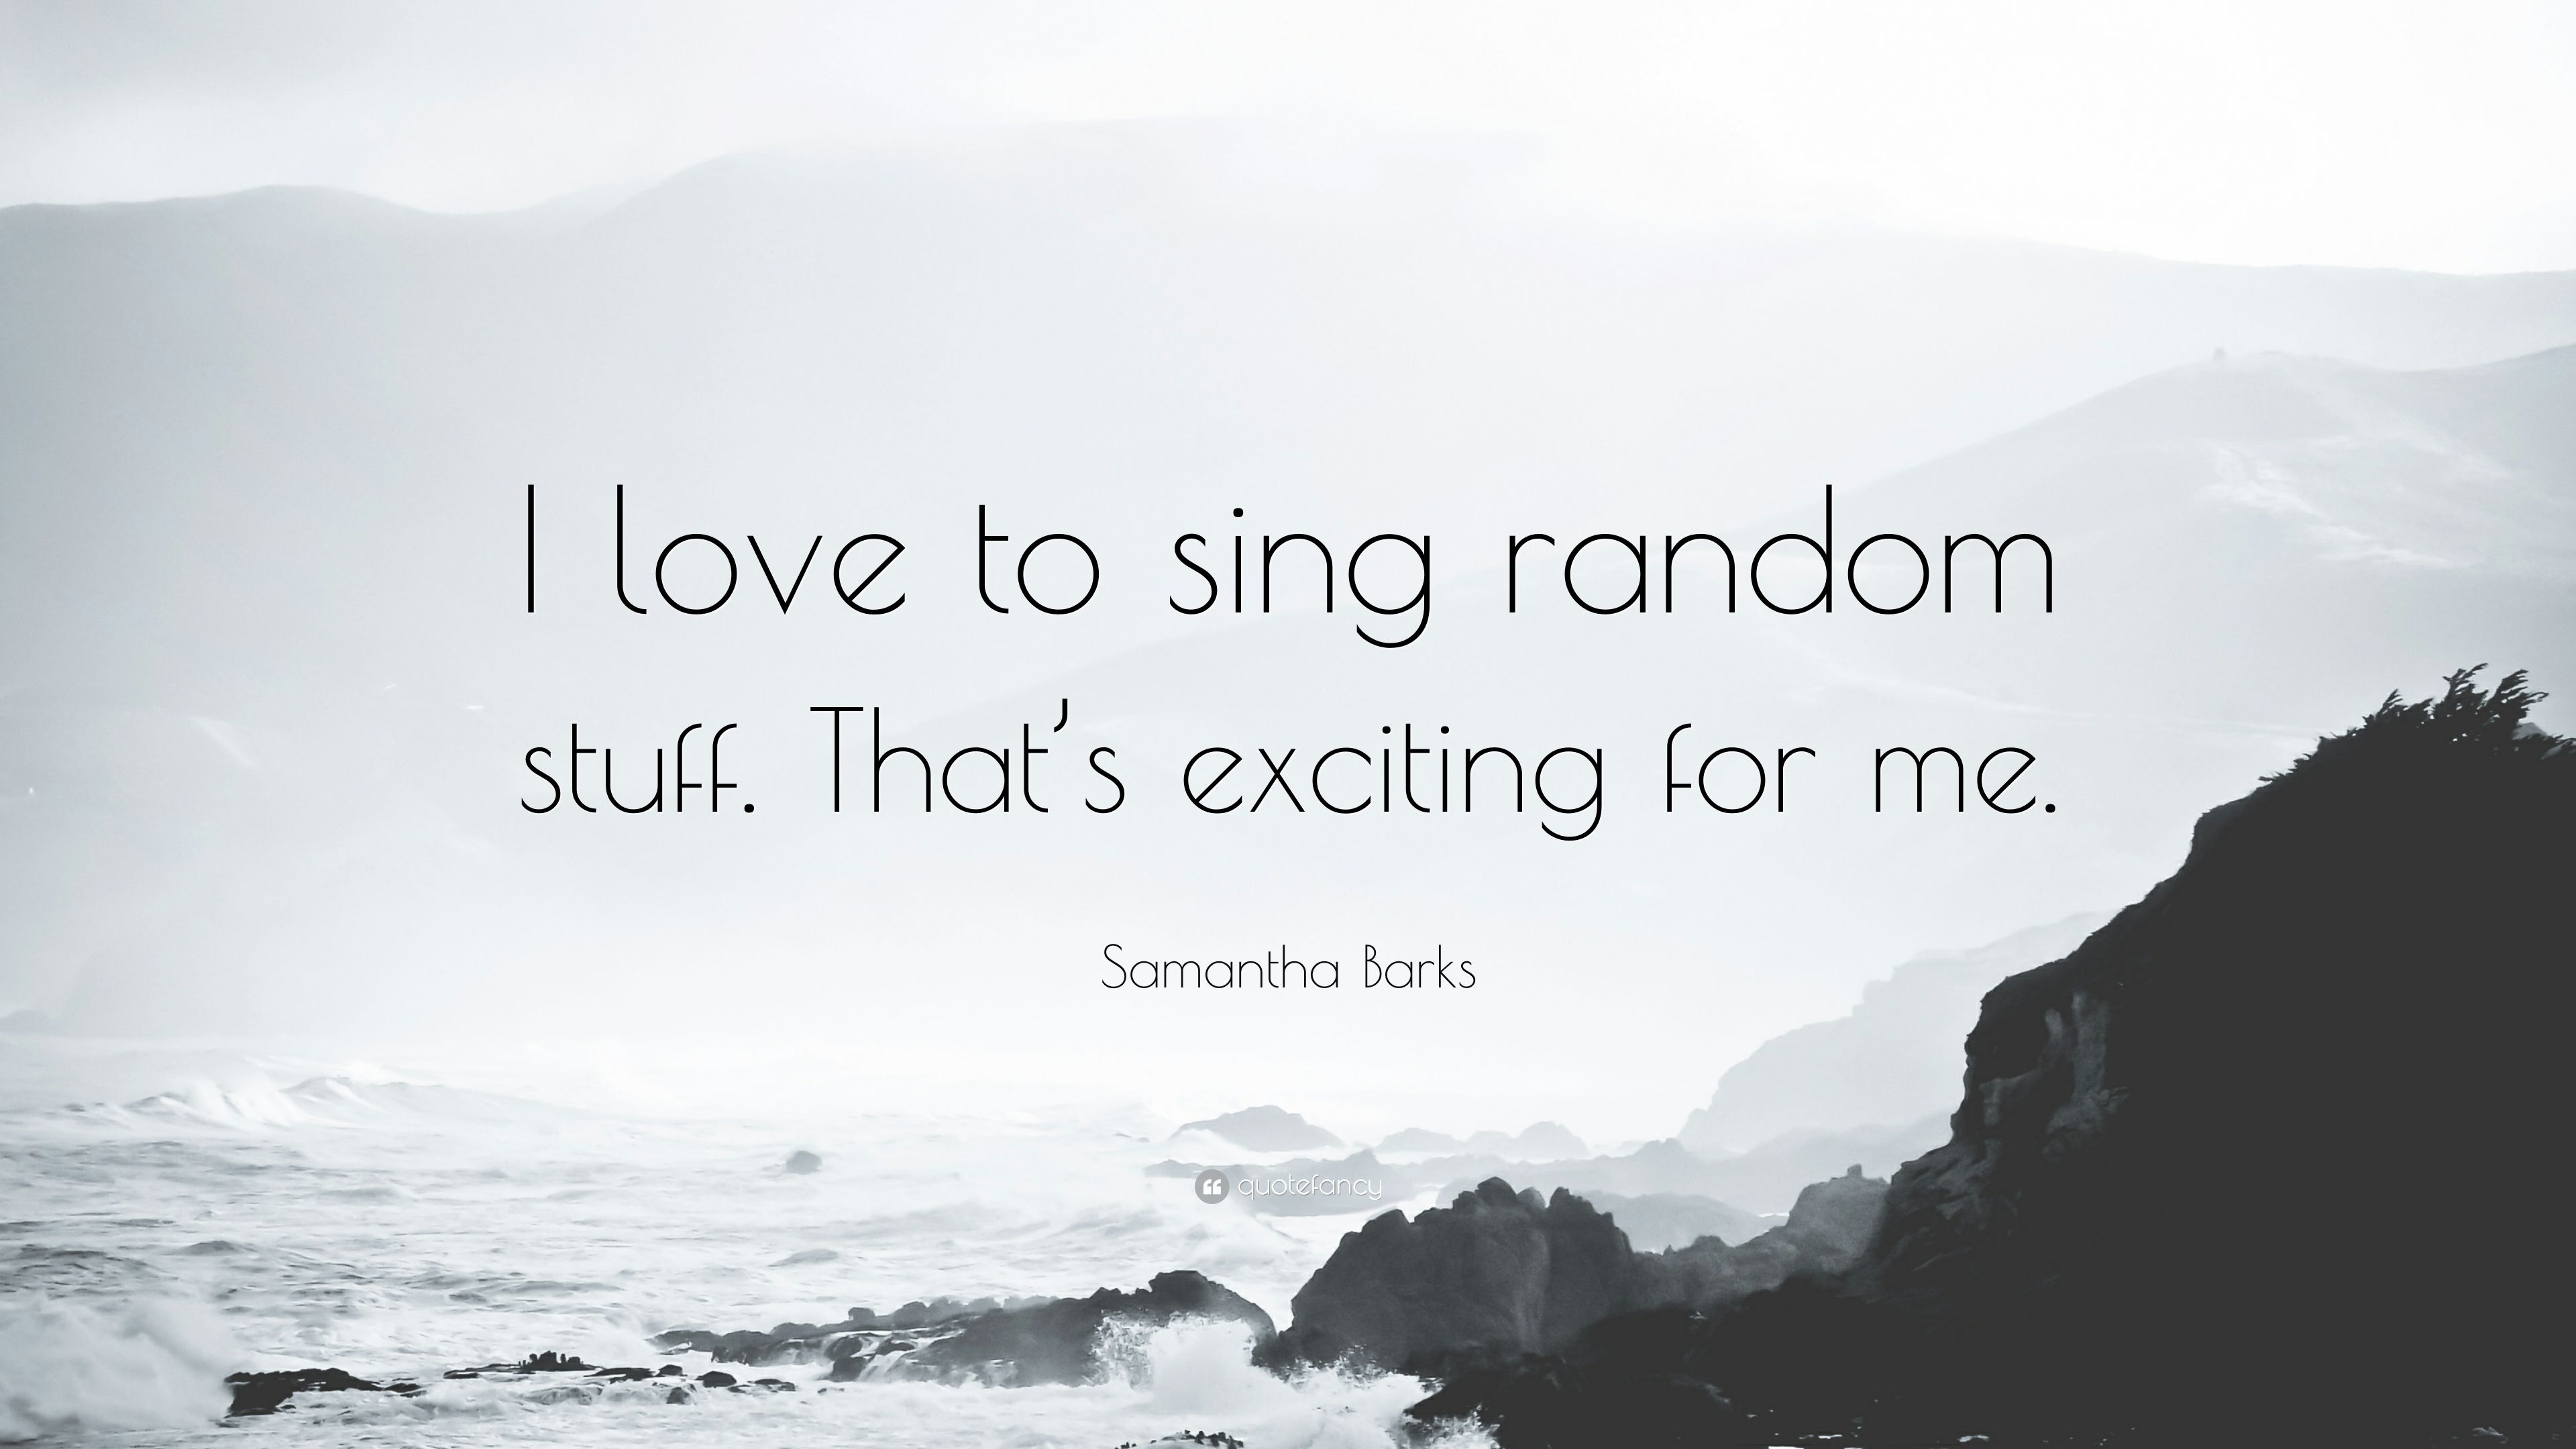 Samantha Barks Quote: “I love to sing random stuff. That's